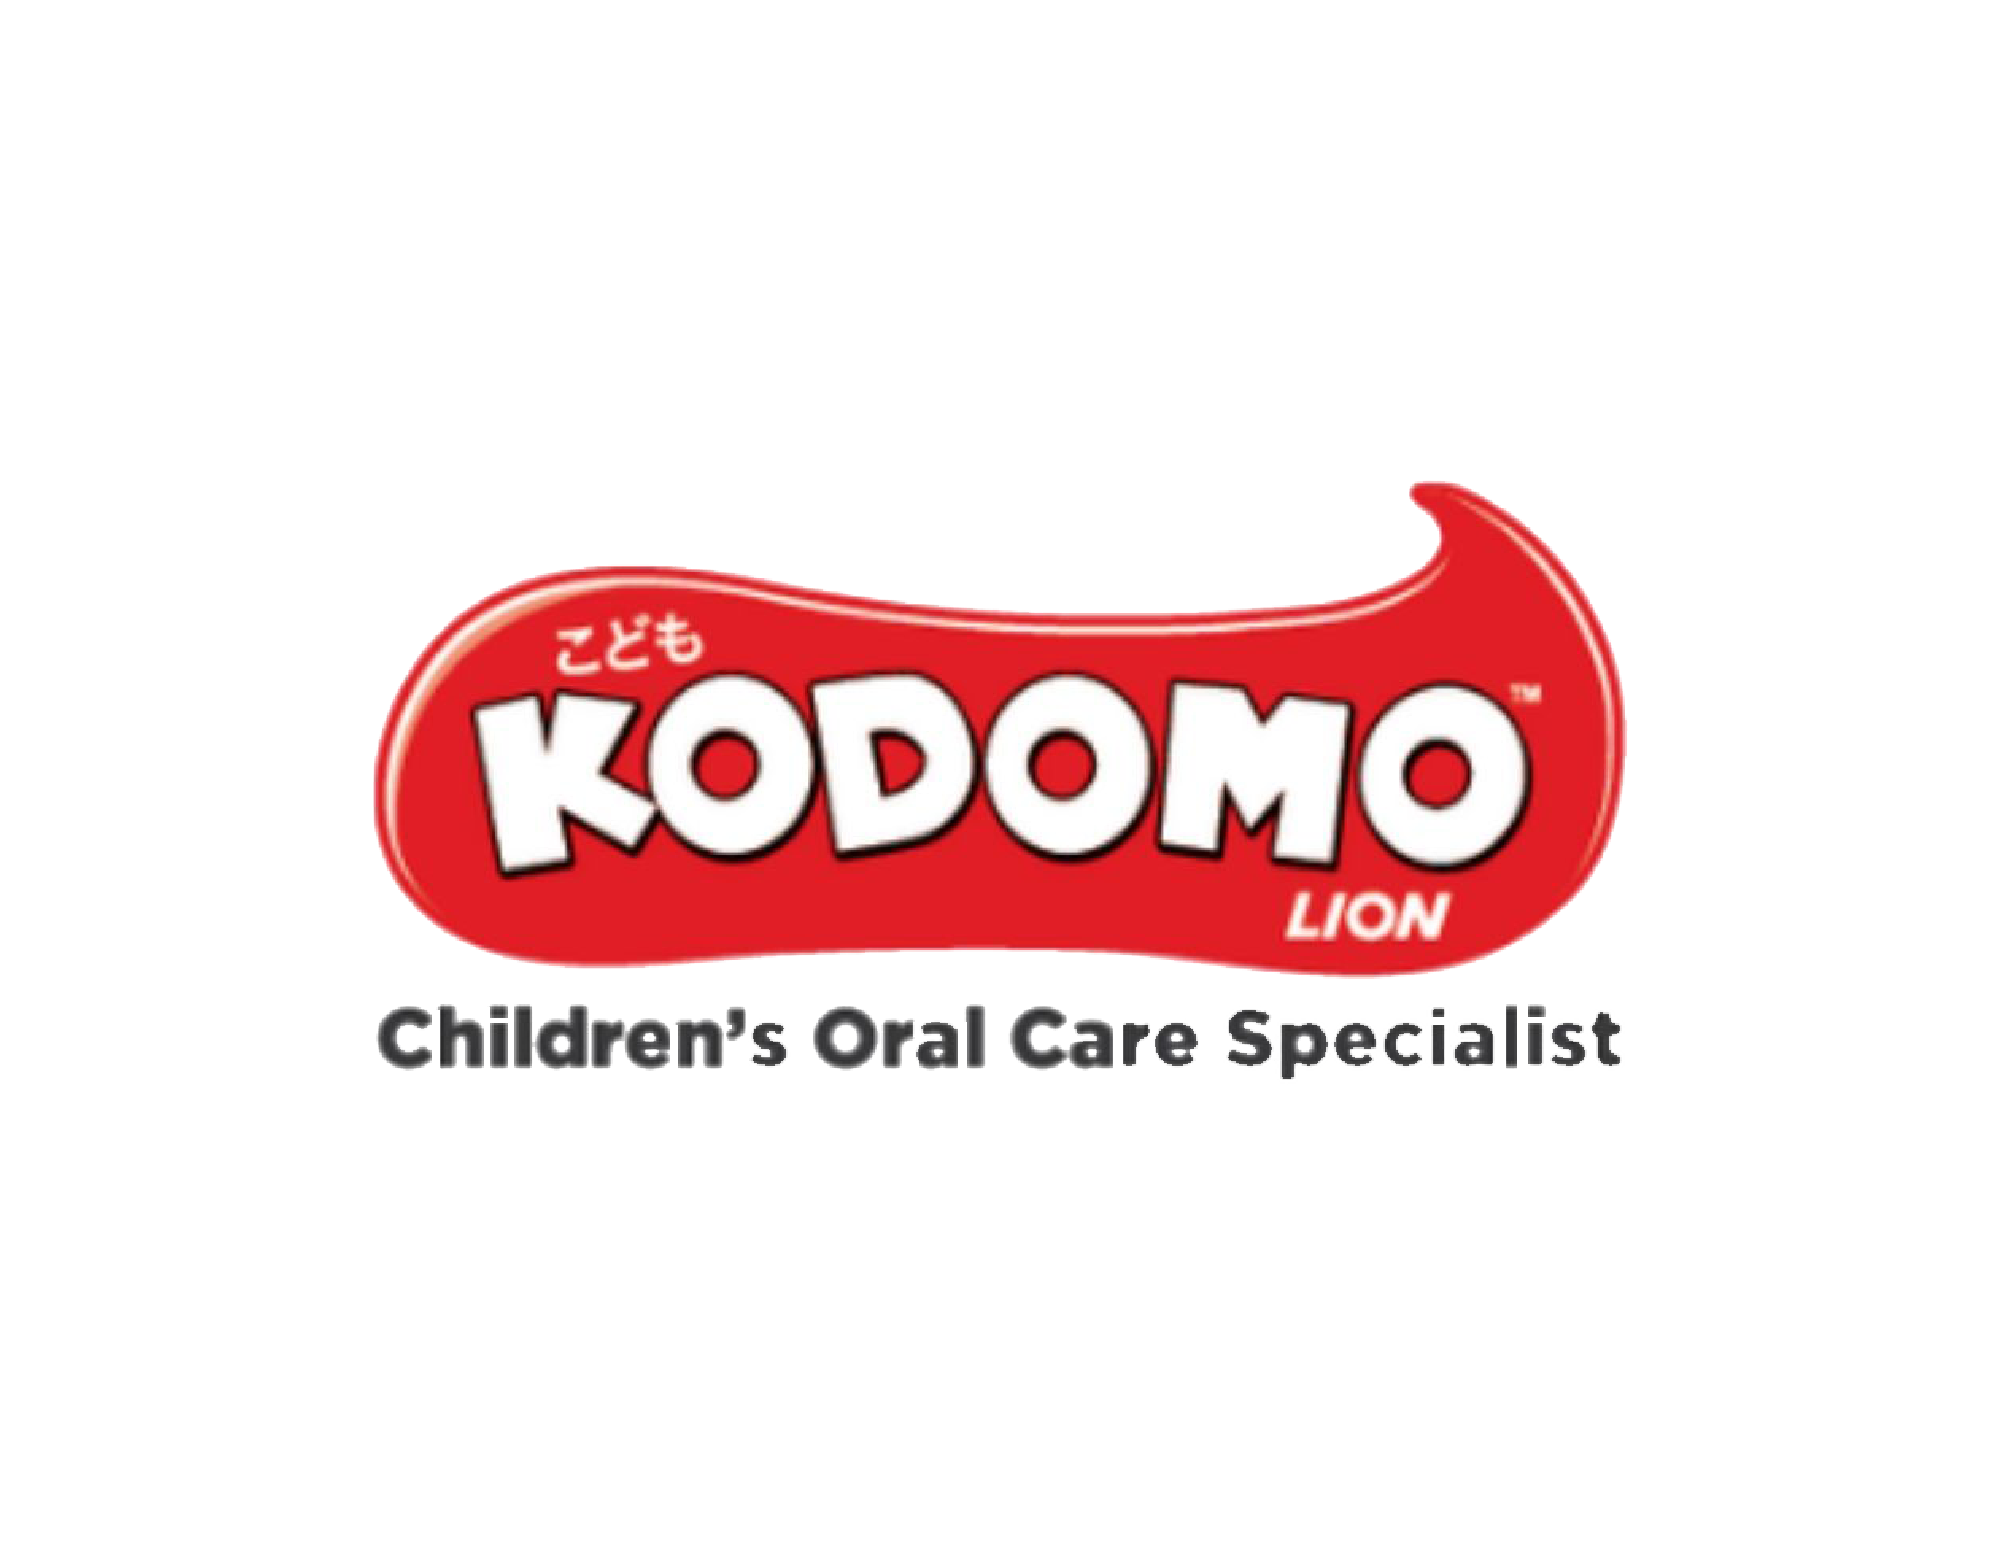 Brand Logo - Kodomo